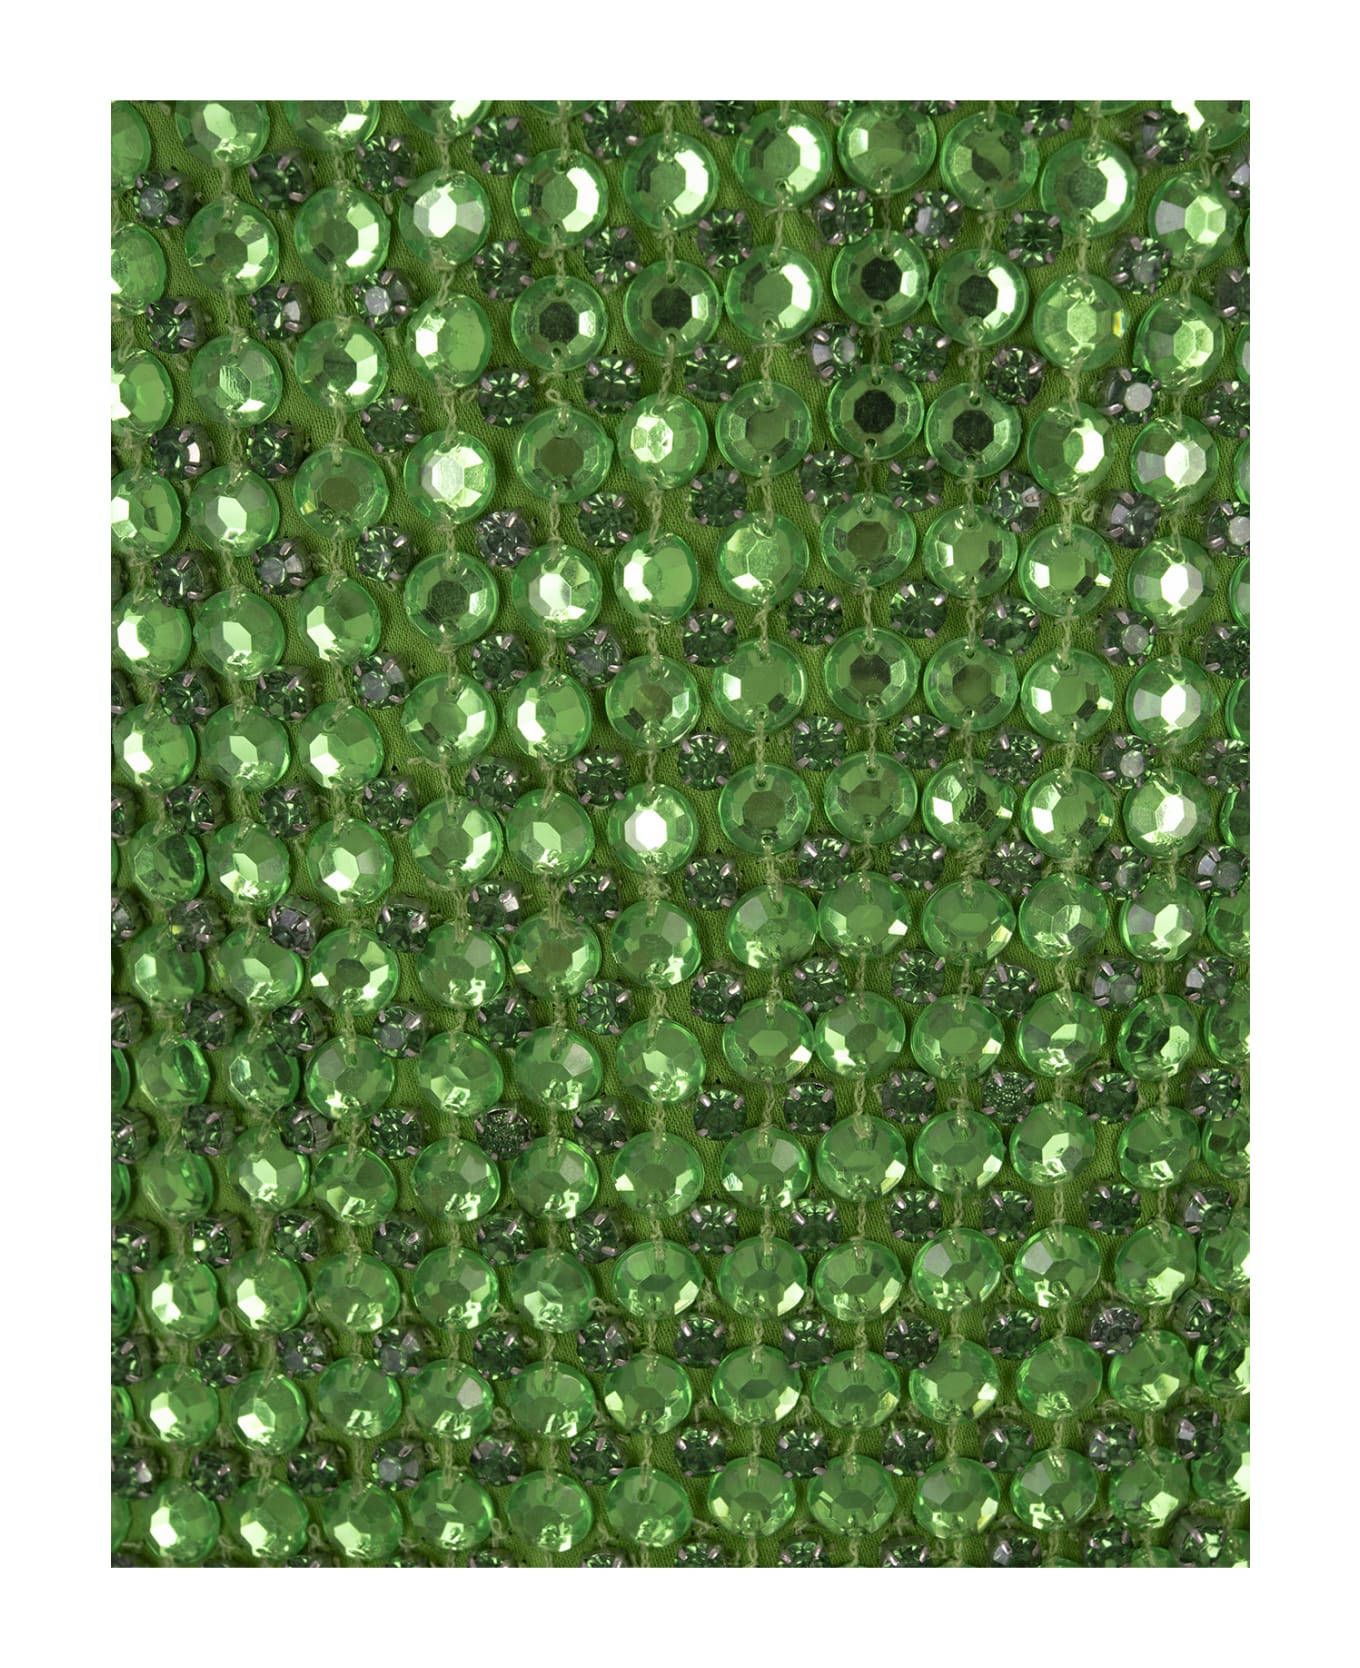 retrofete Lime Punch Crystal Holland Dress - Verde